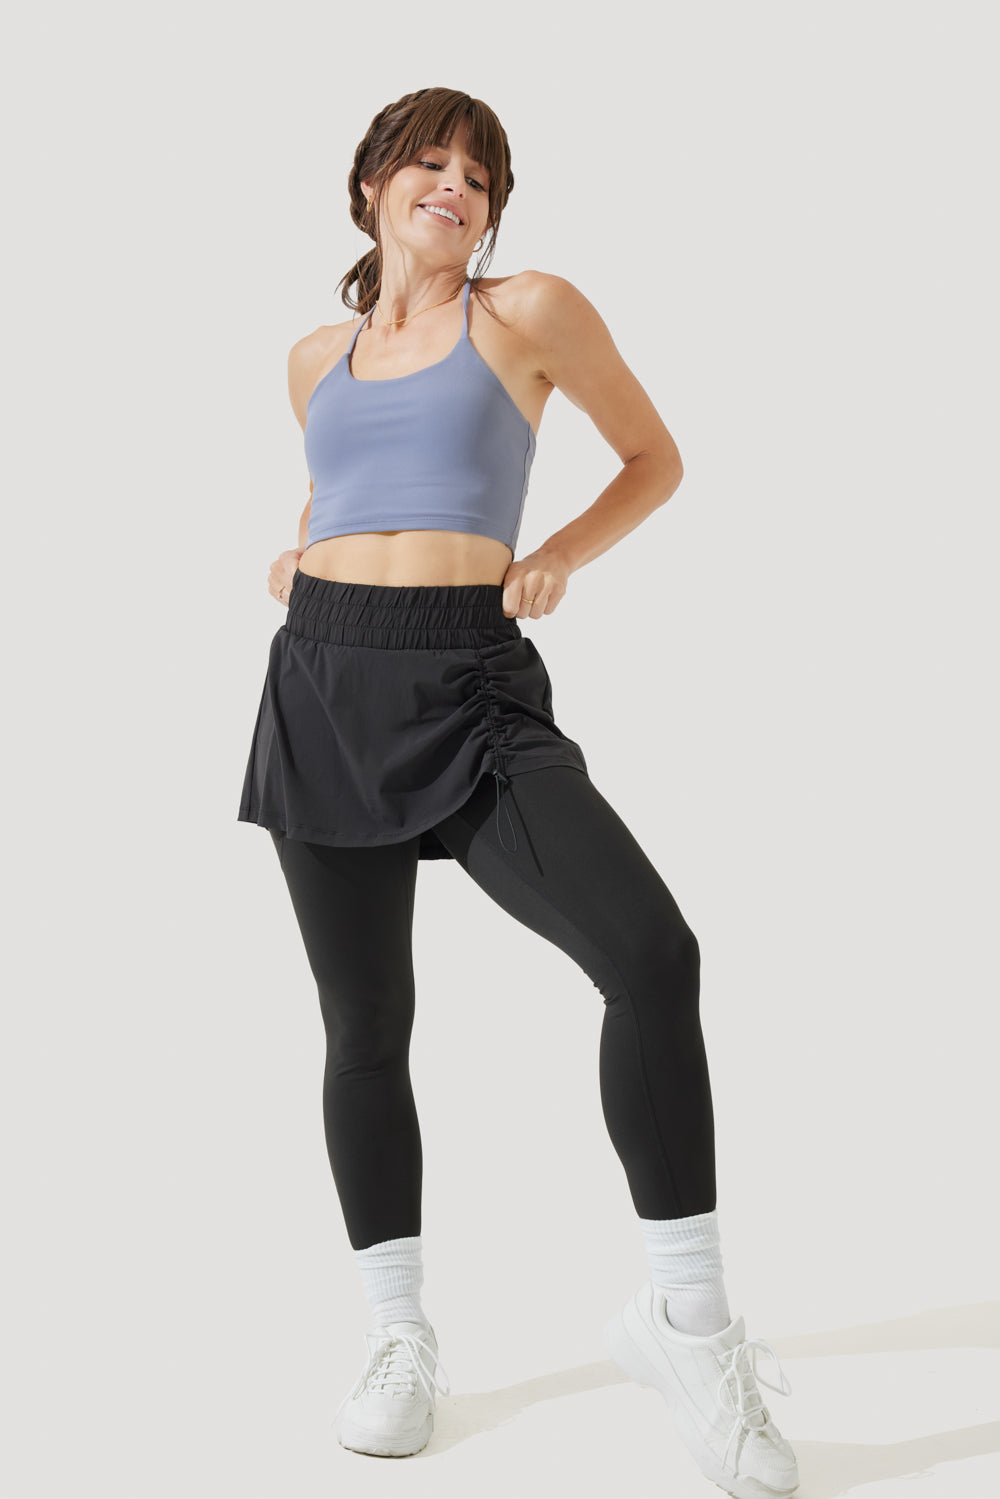 PopFlex Yoga Pants, Leggings, Sports Bras and Tanks